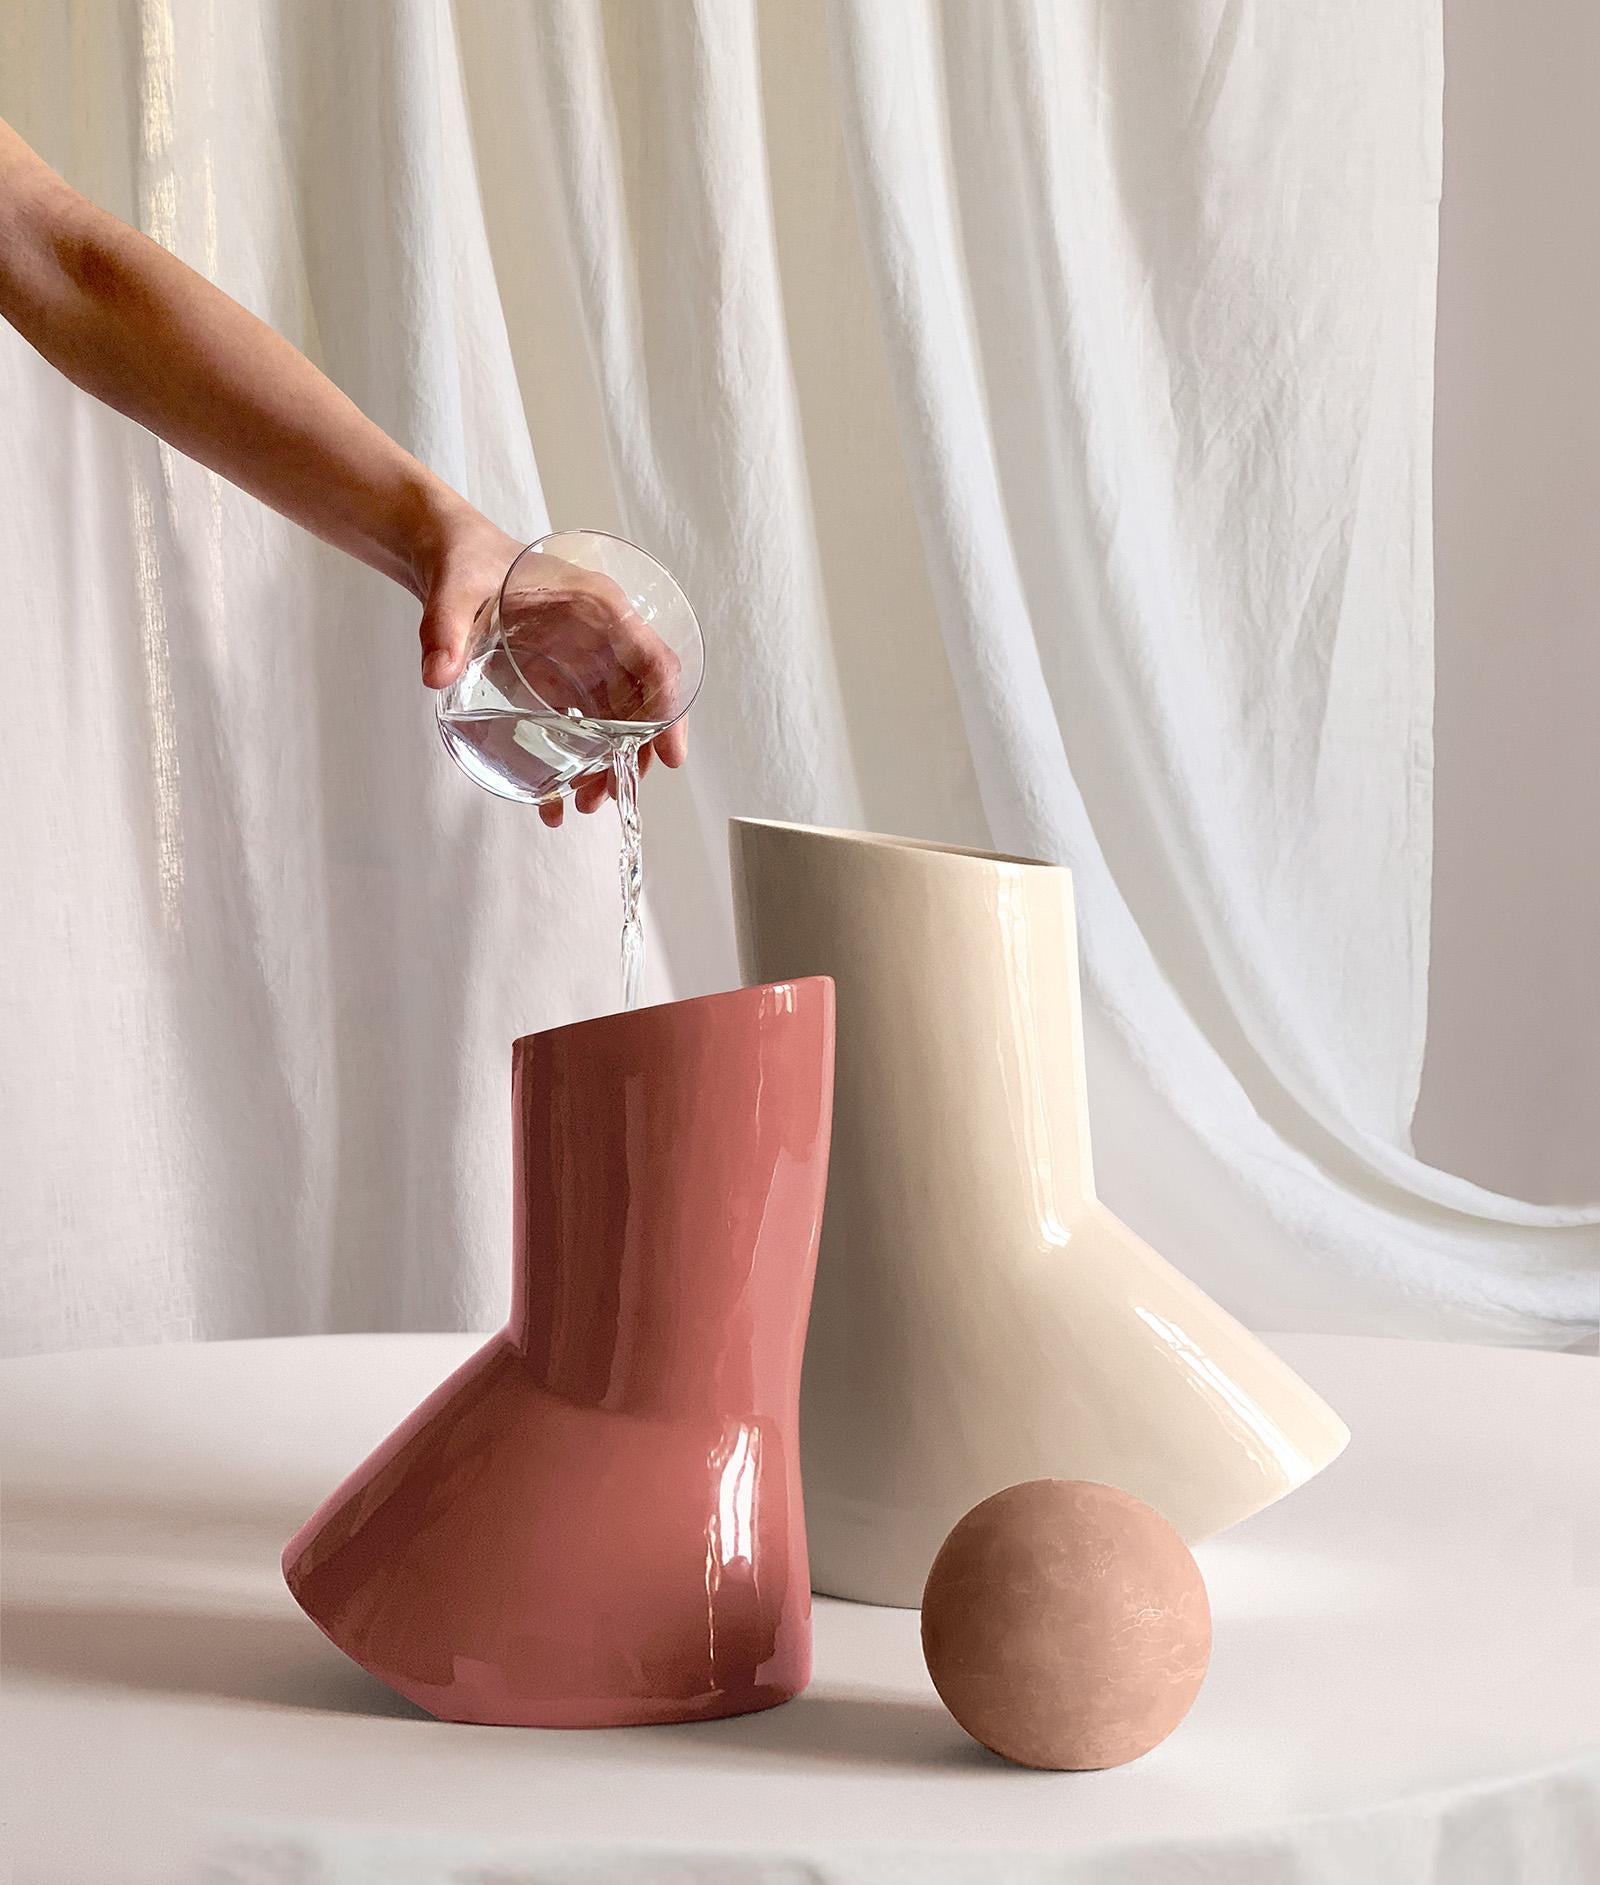 Italian Set of 2 Menadi Ceramic Vases by Studio Zero For Sale